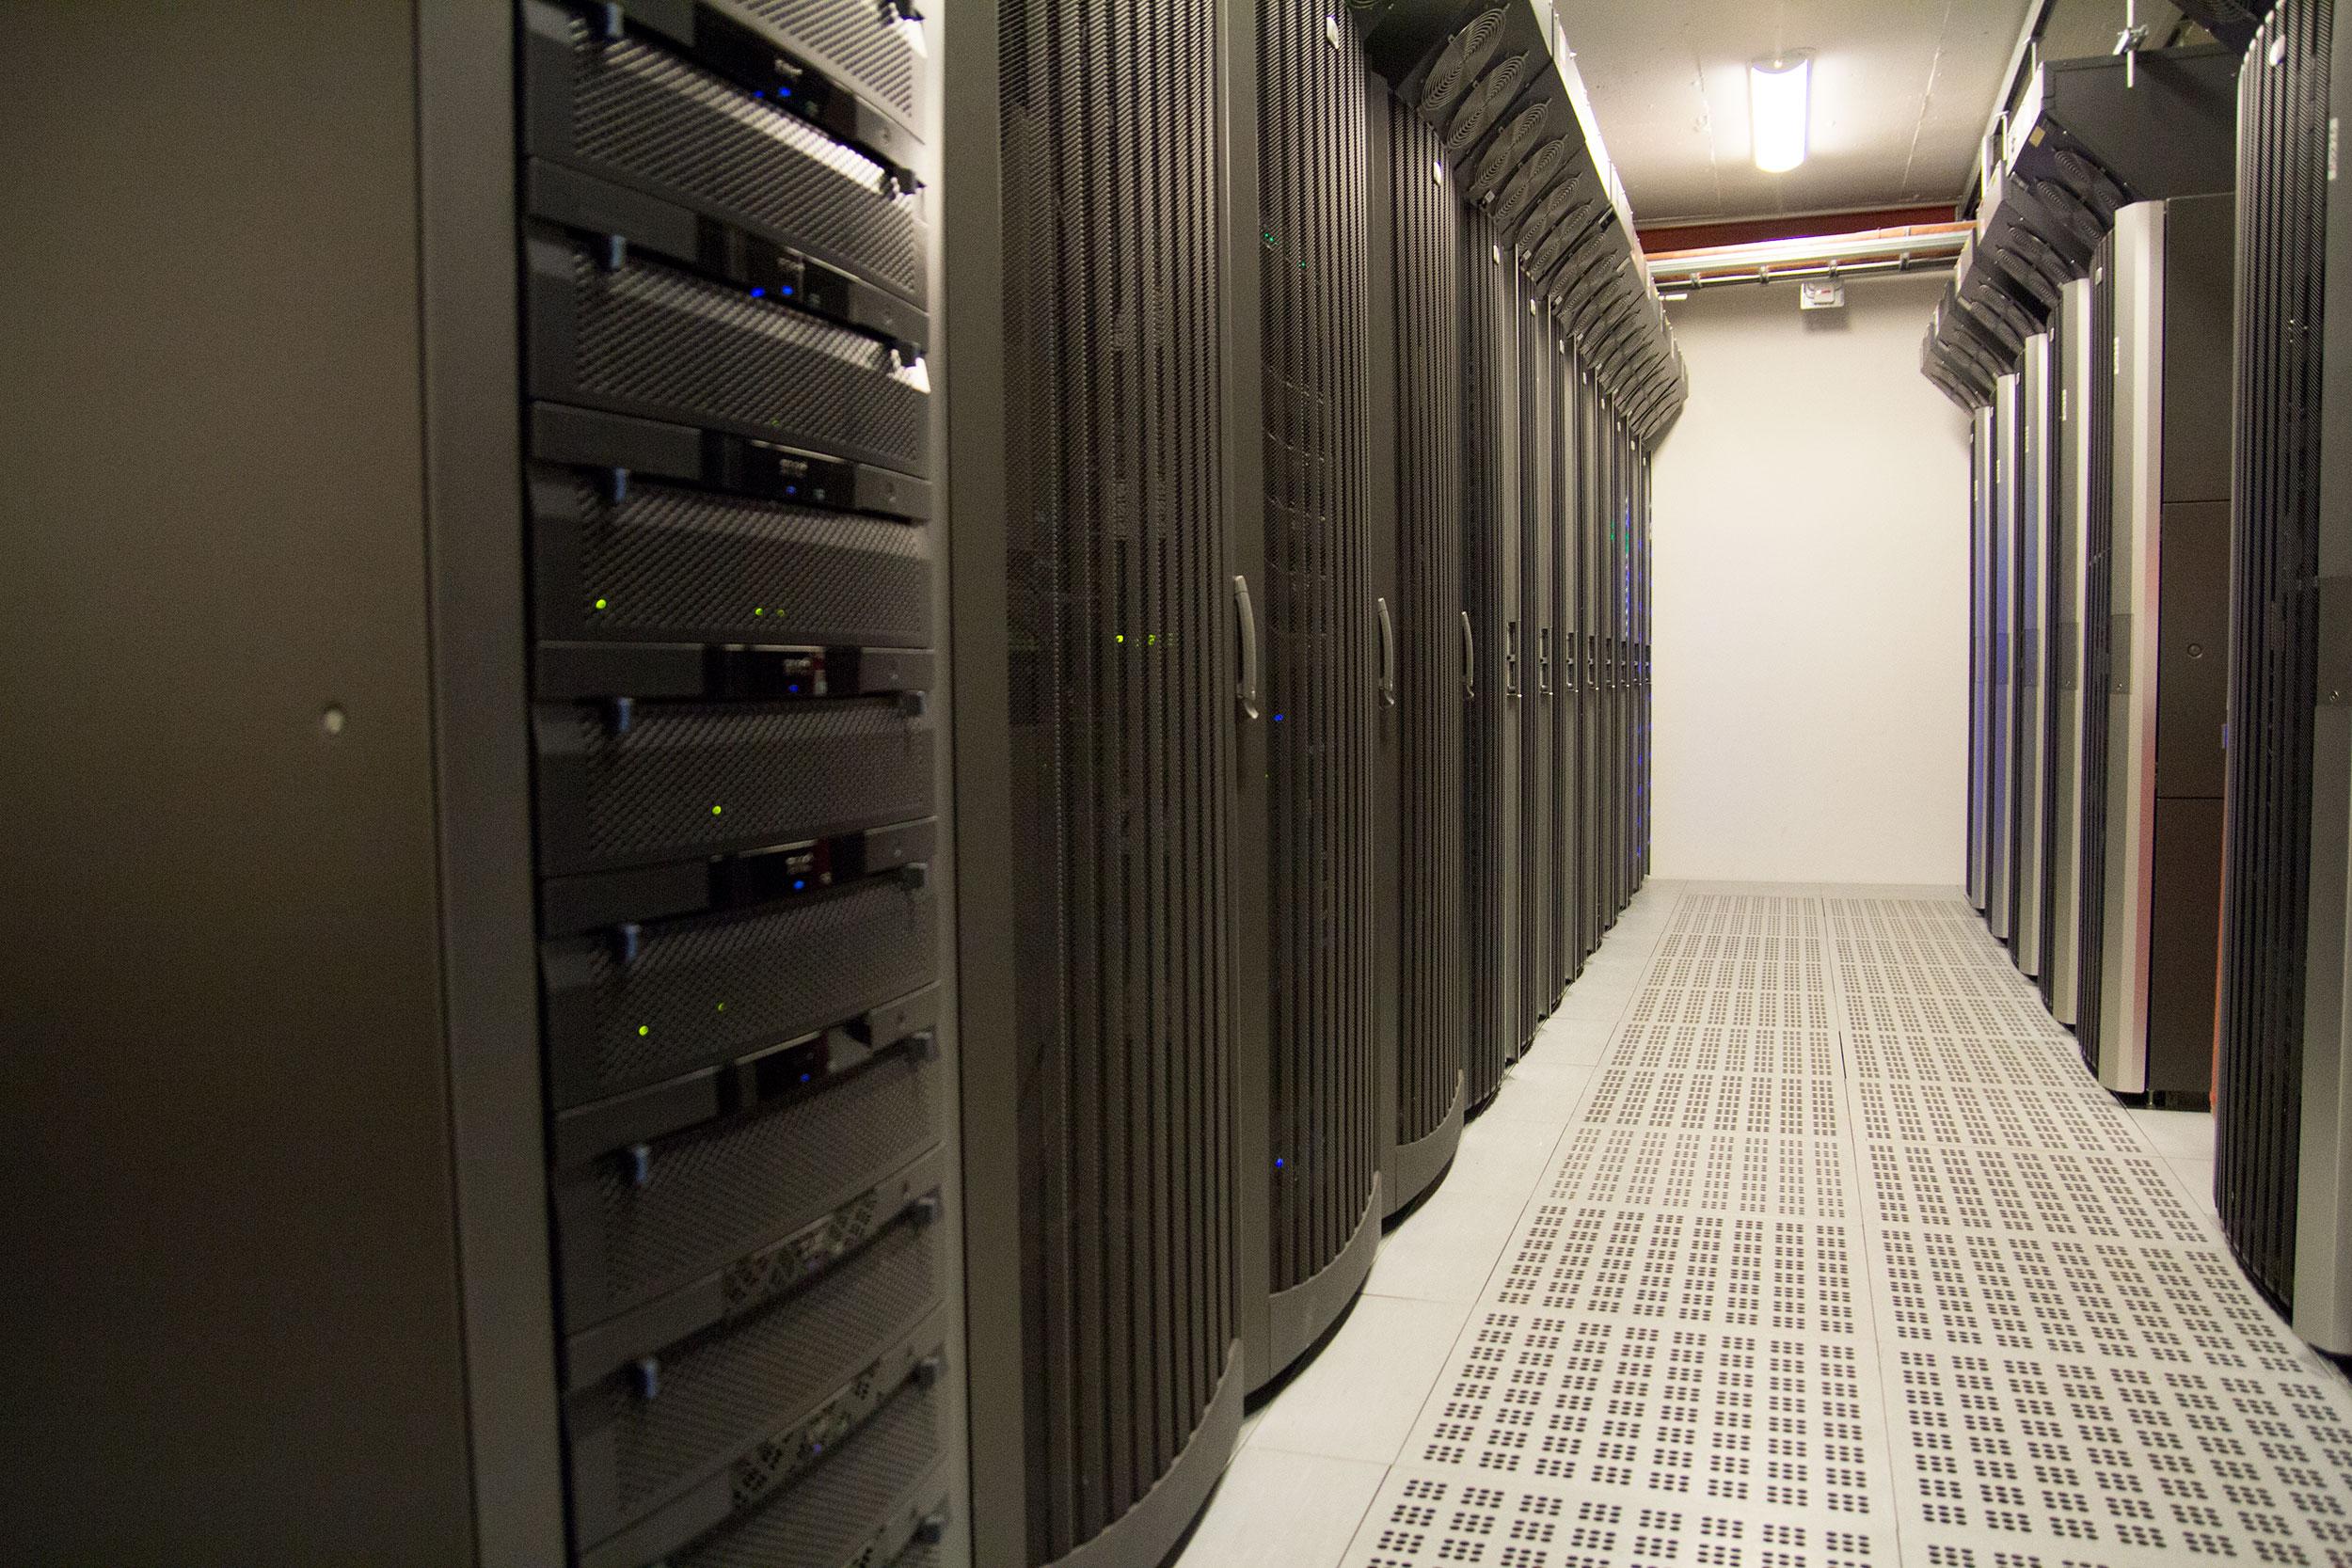 Serverparken inneholdt langt flere lagringsbokser før – men med stadig større disker har det blitt mindre plassbehov.Foto: Jørgen Elton Nilsen, Hardware.no